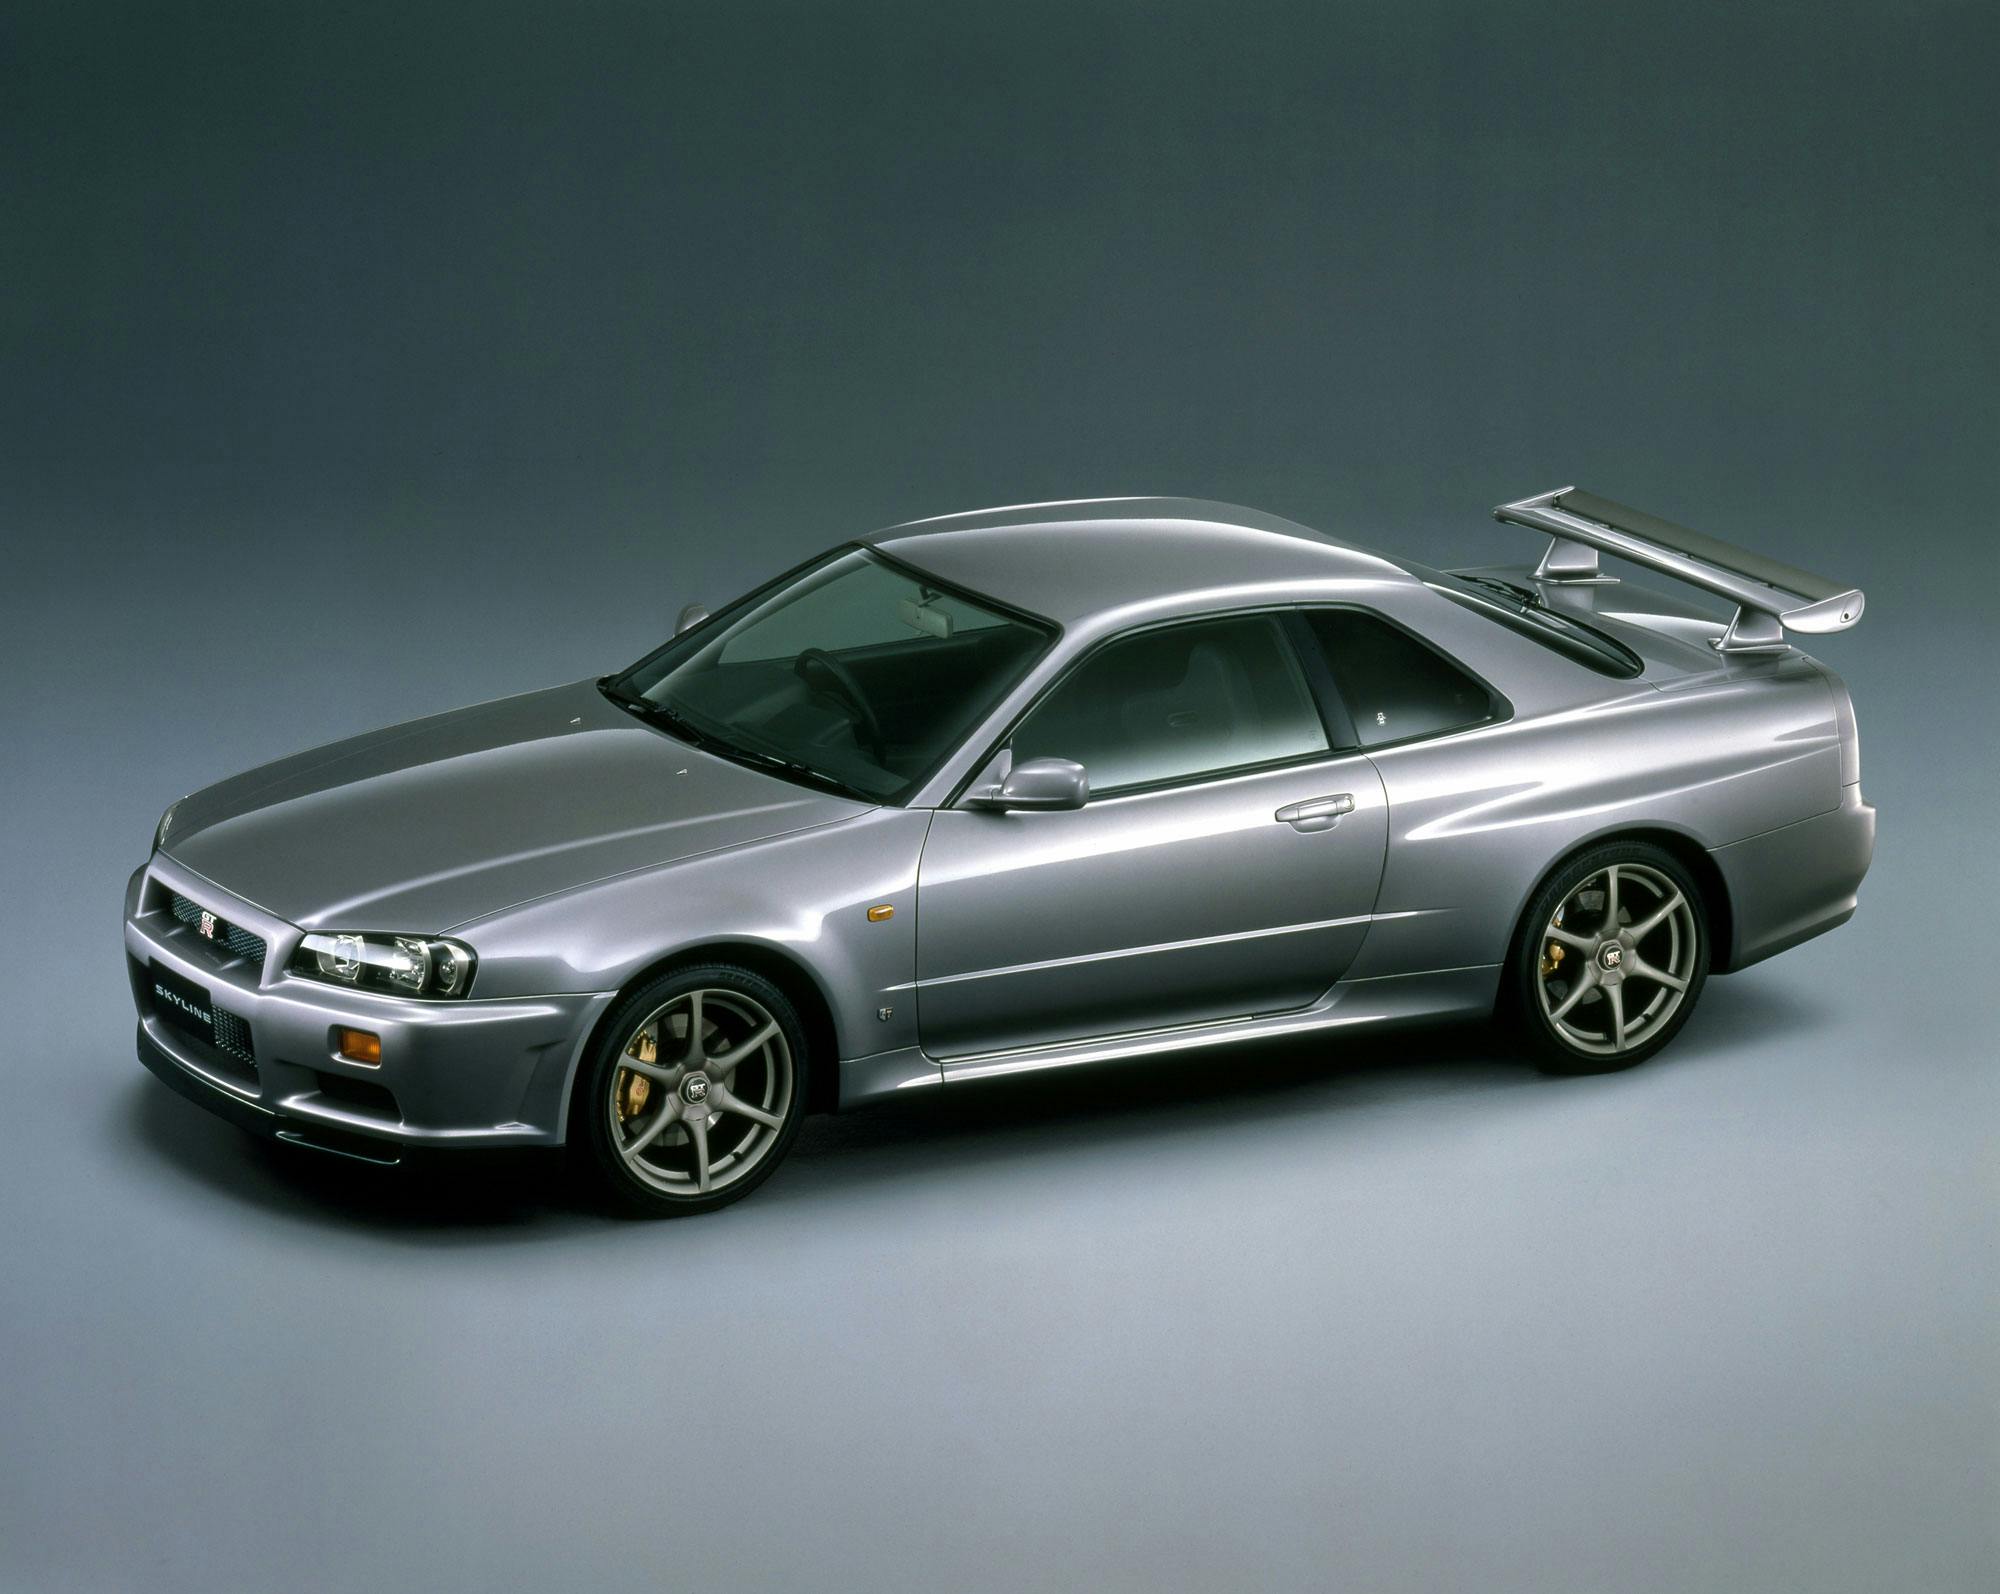 1999 Skyline GT-R front three-quarter